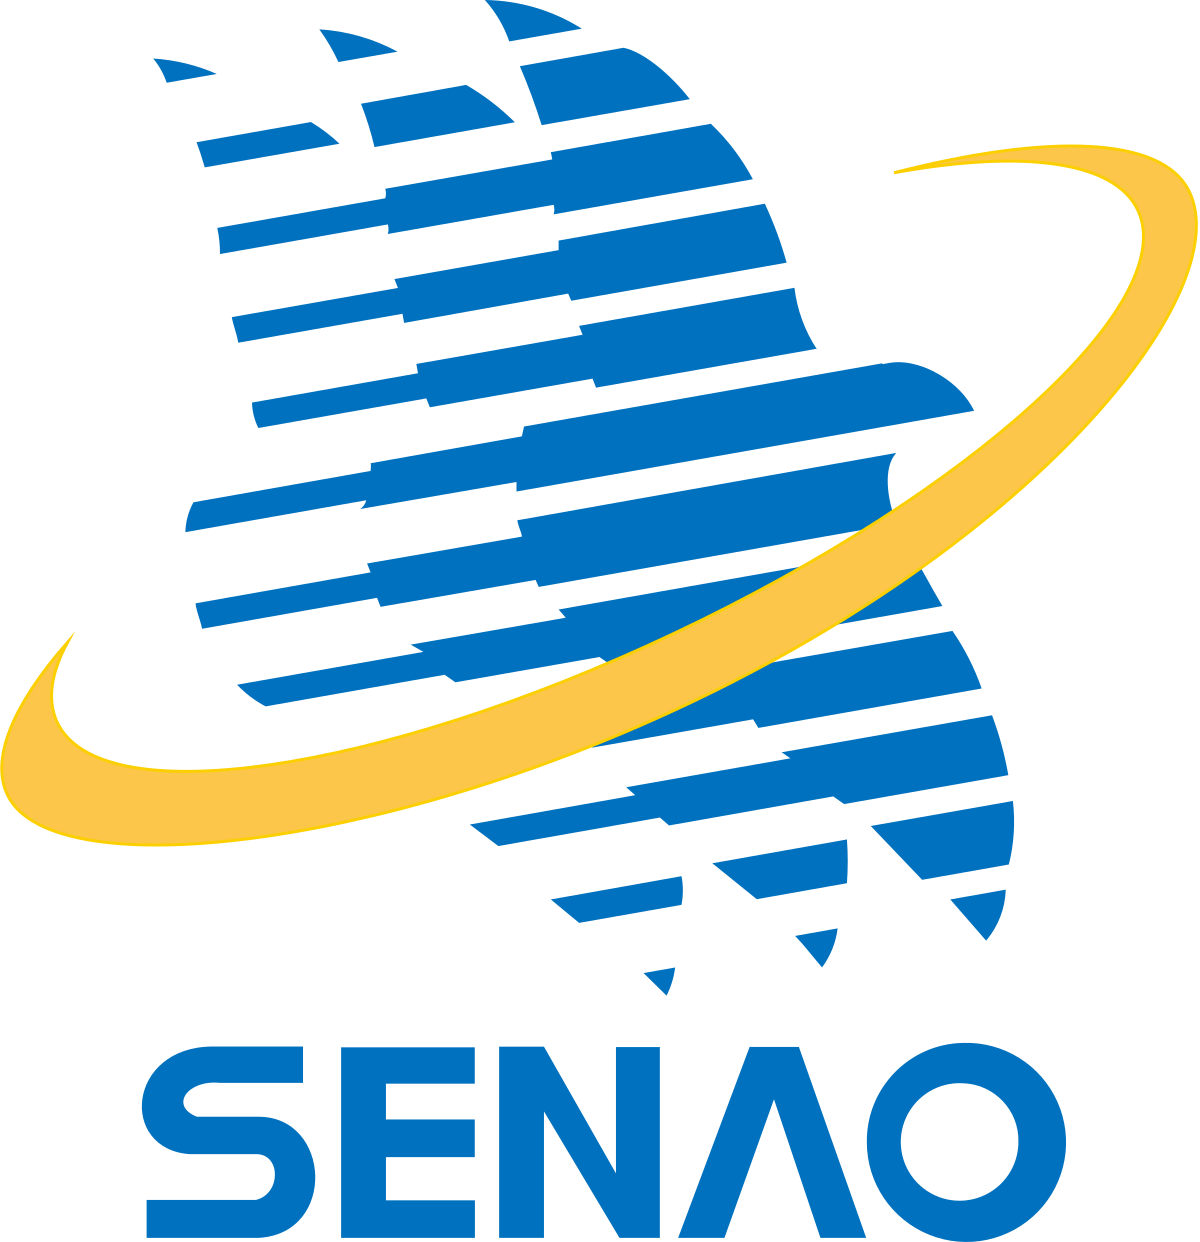 Senao International